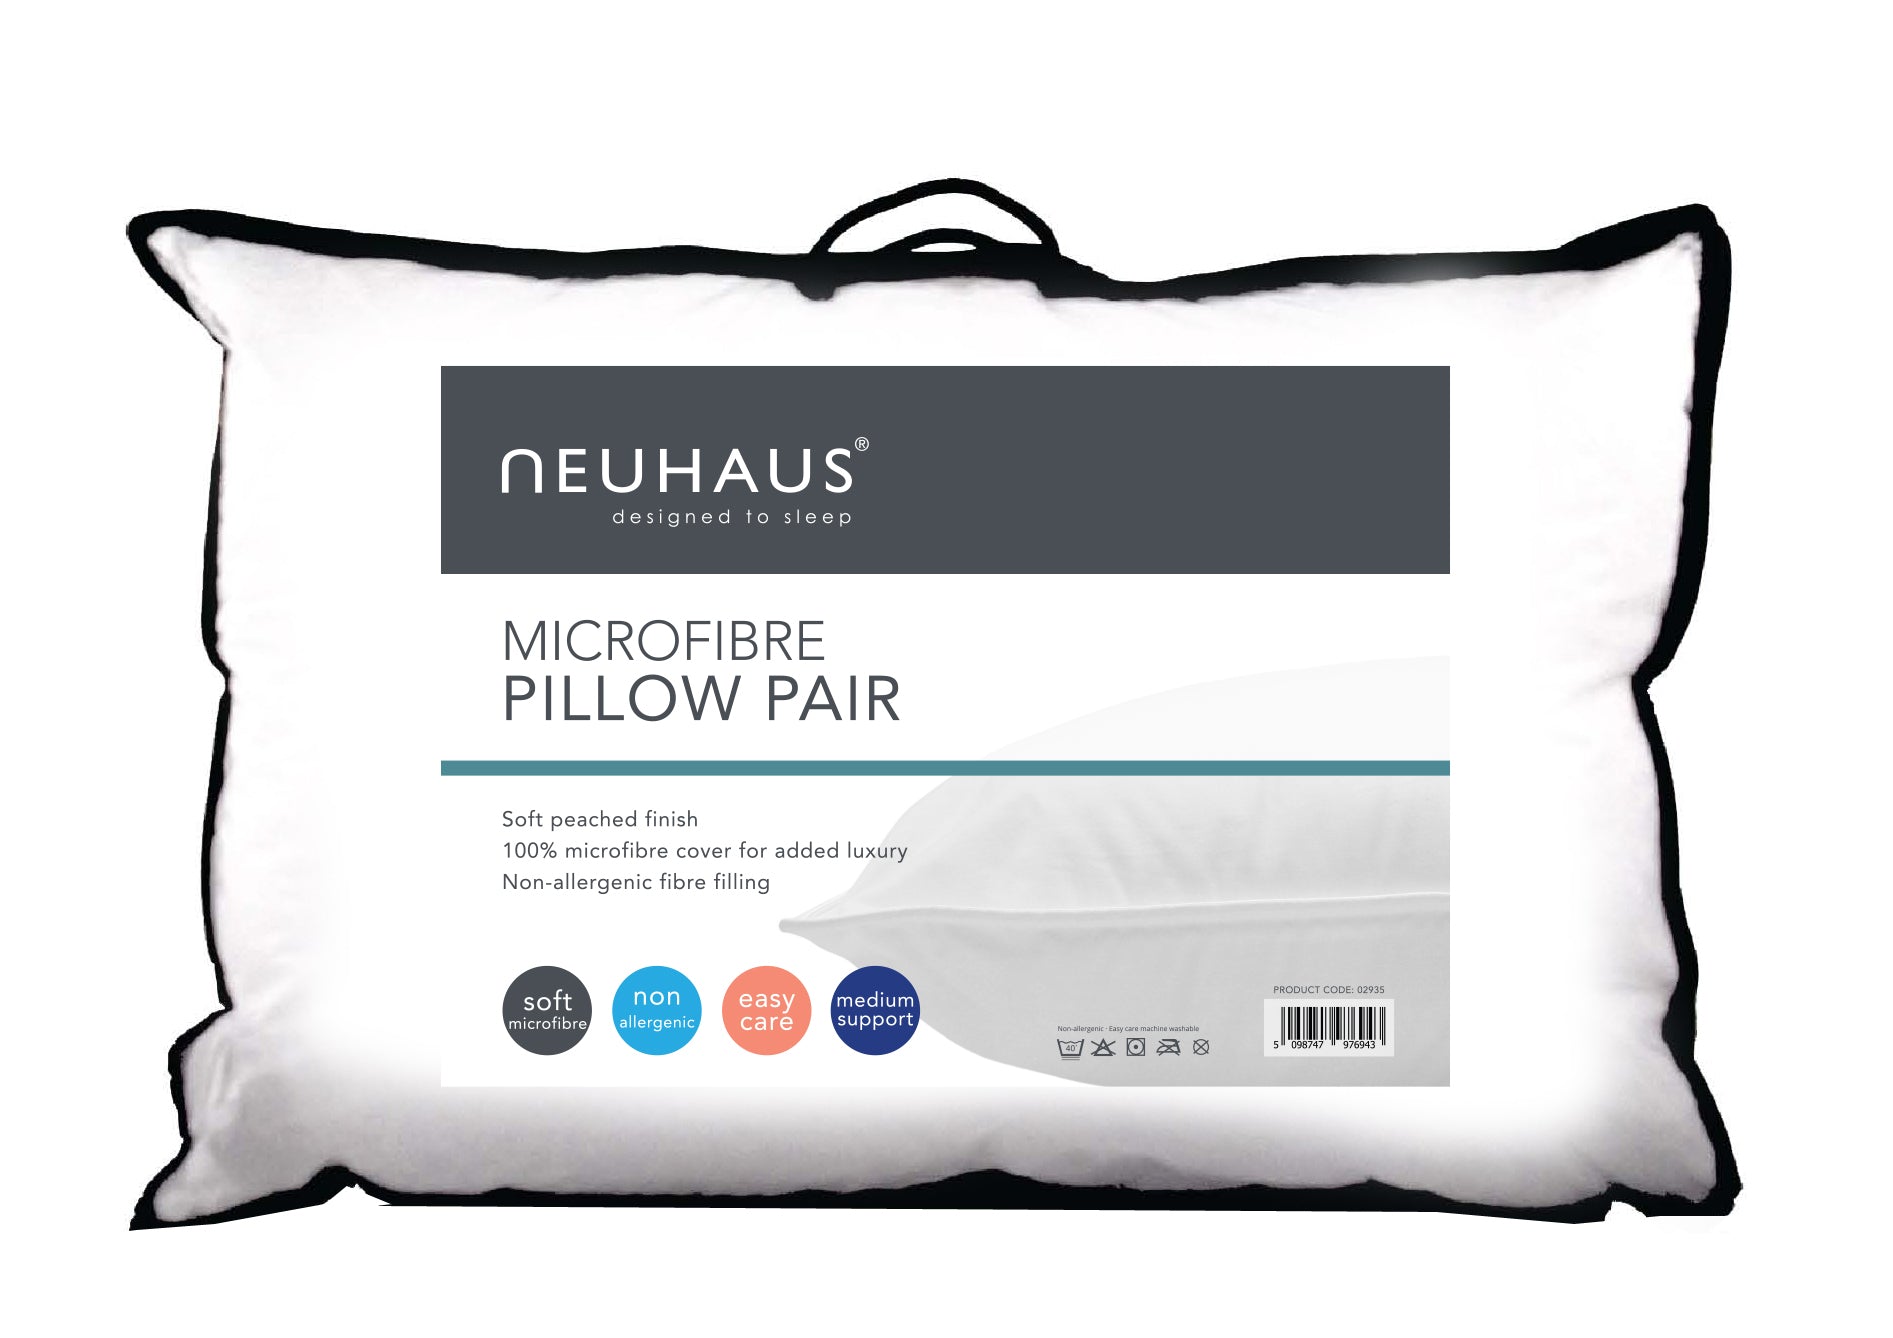 Neuhaus New 2pk Microfibre Pillow Pair Medium Support